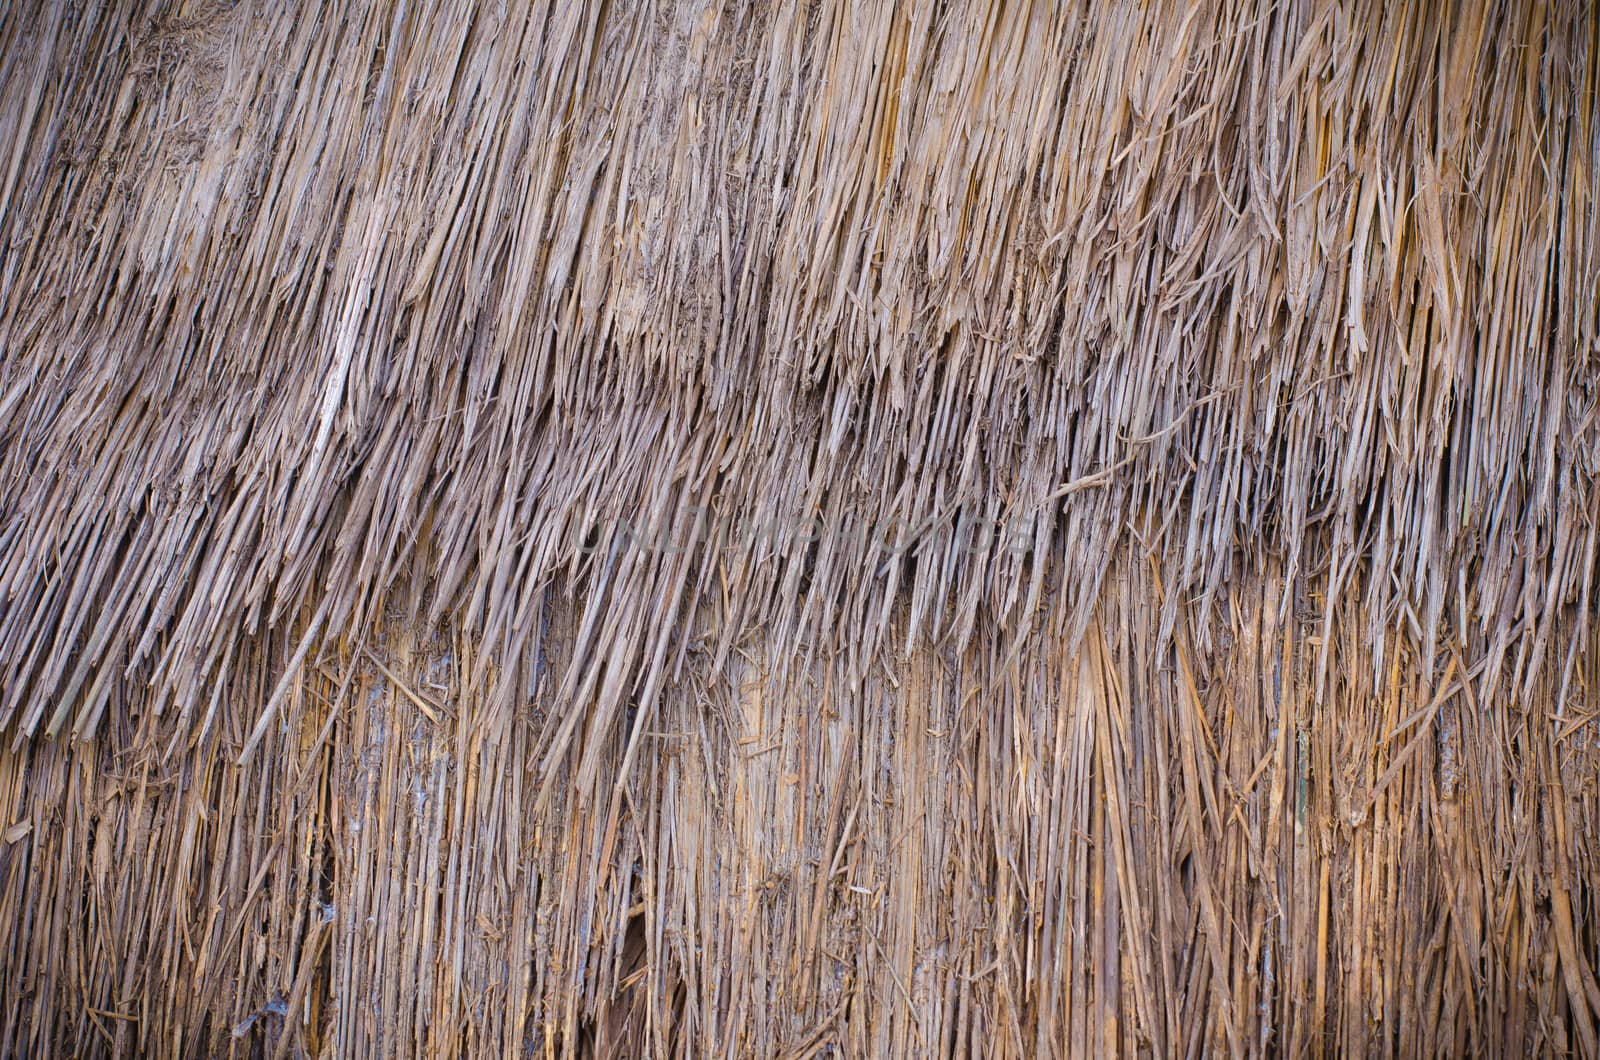 Dry straw pattern by thekaikoro